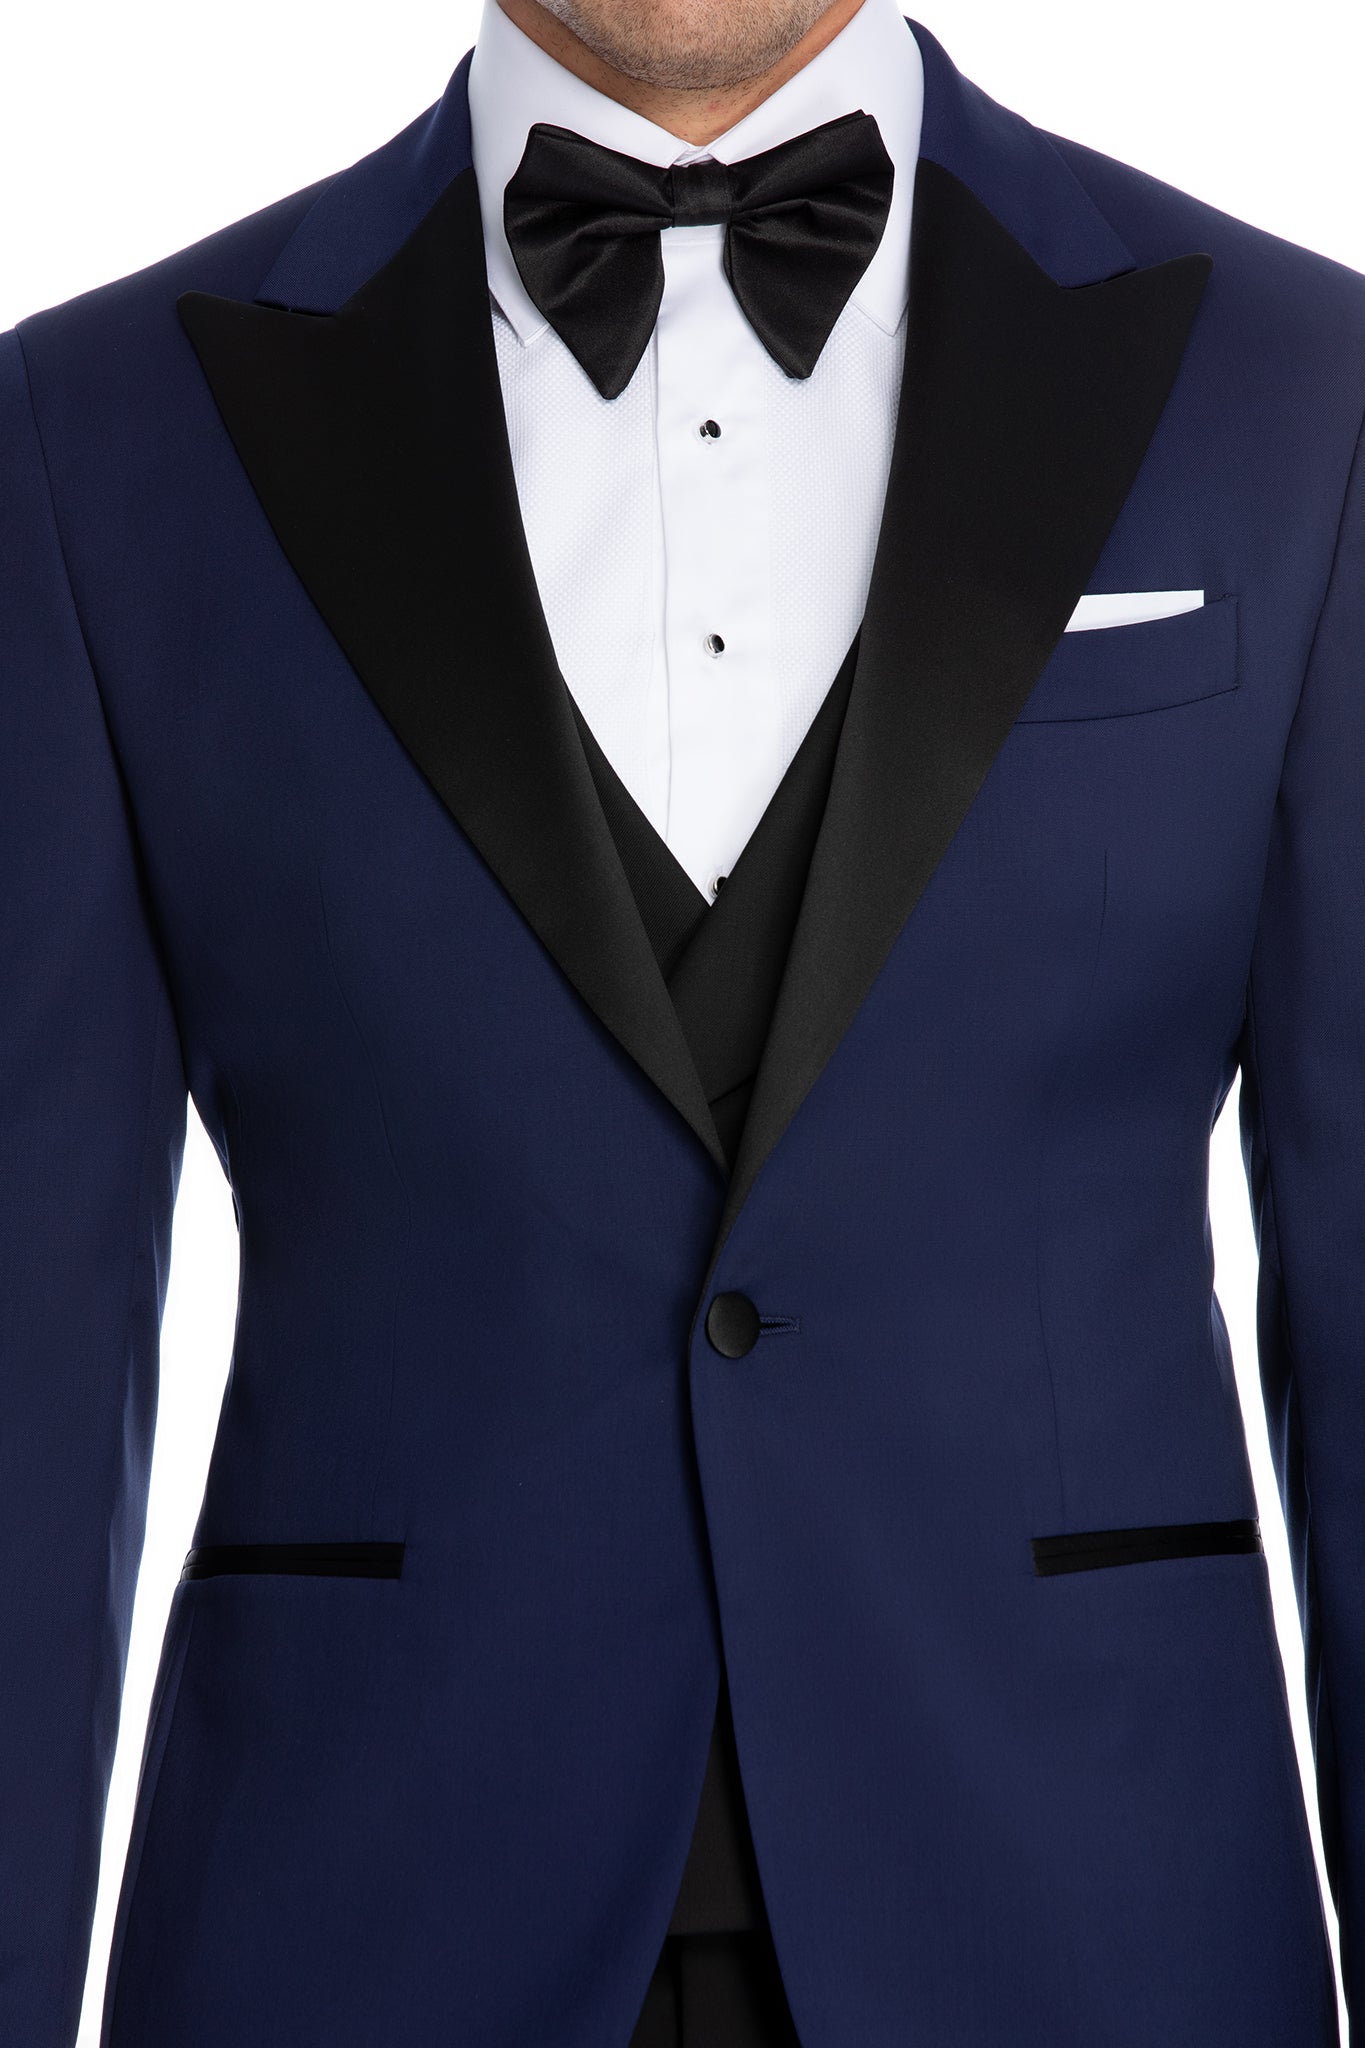 Navy tuxedo with contrasting lapel